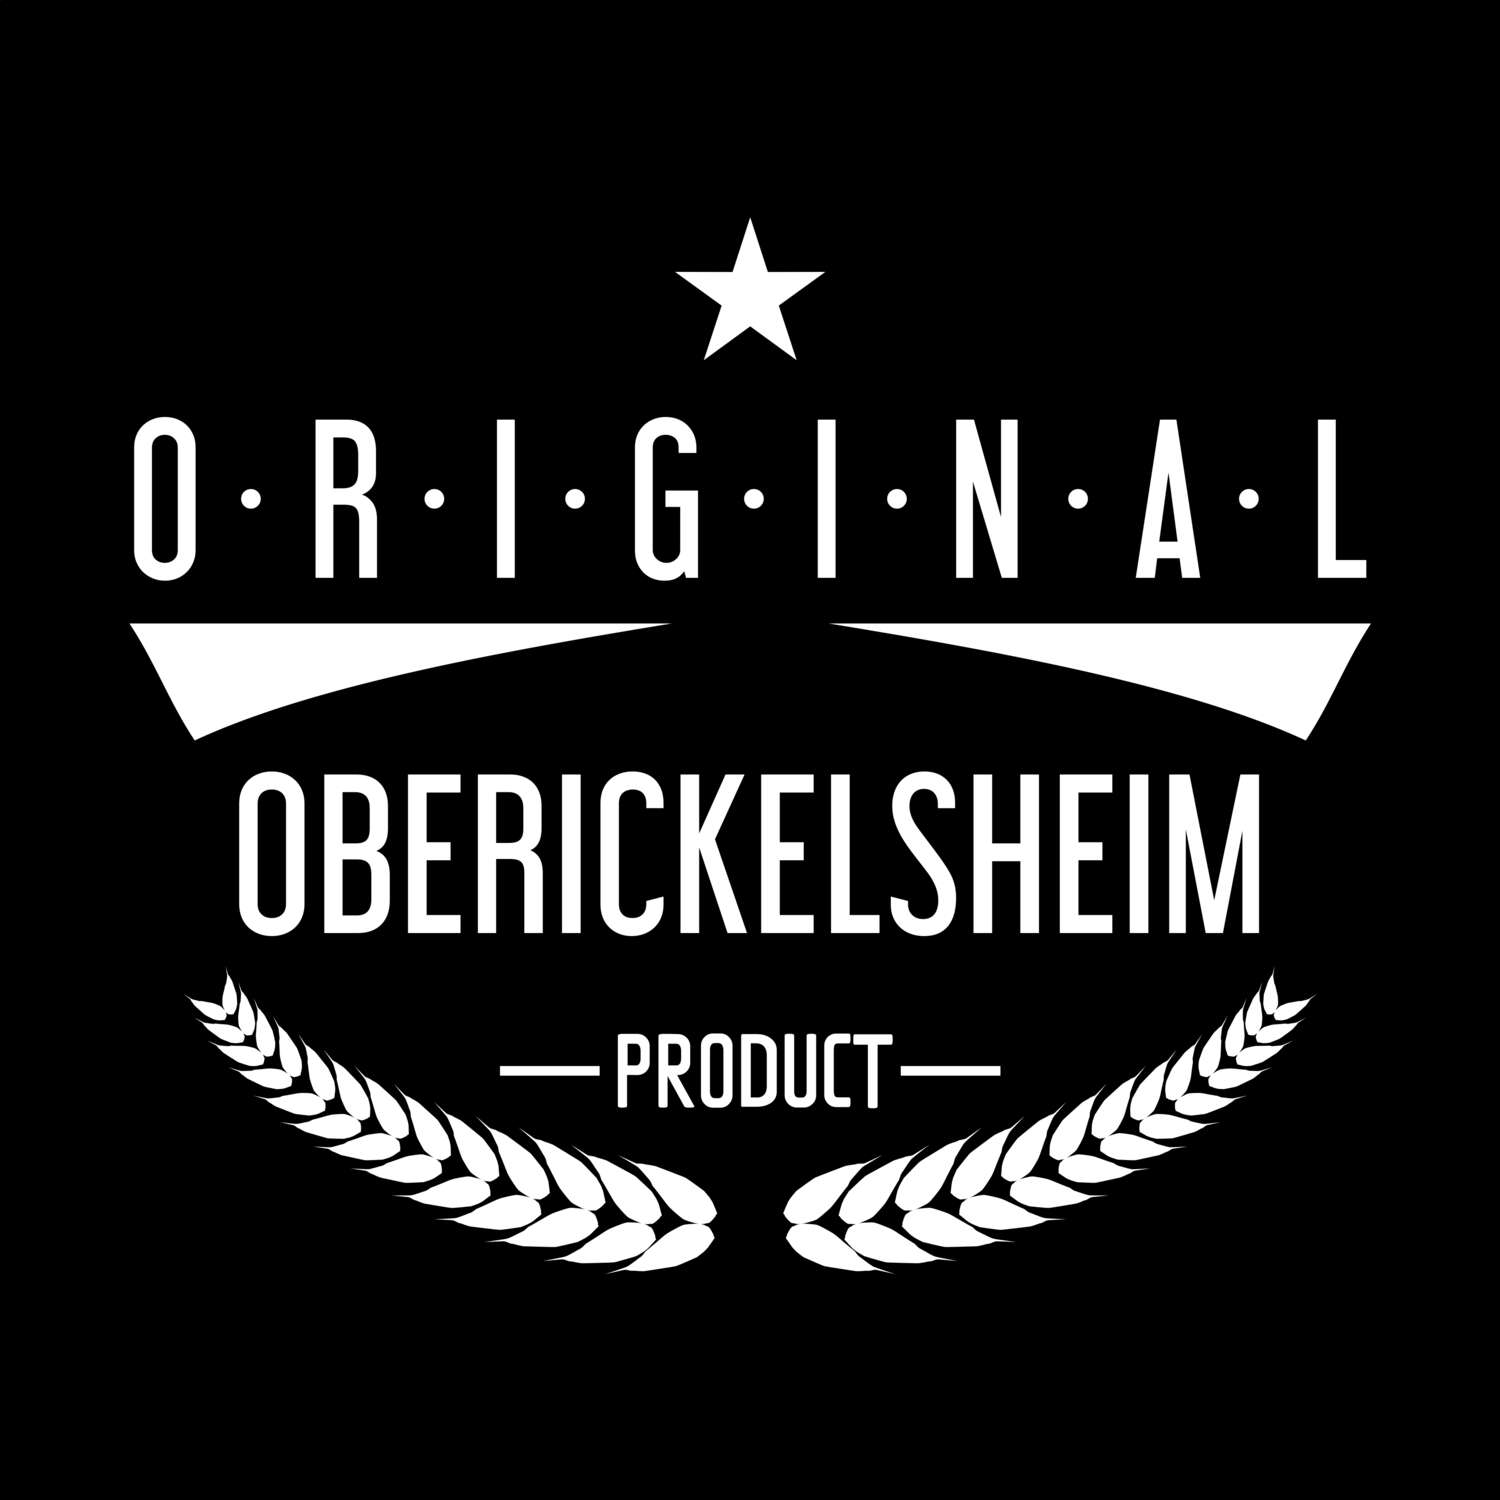 Oberickelsheim T-Shirt »Original Product«